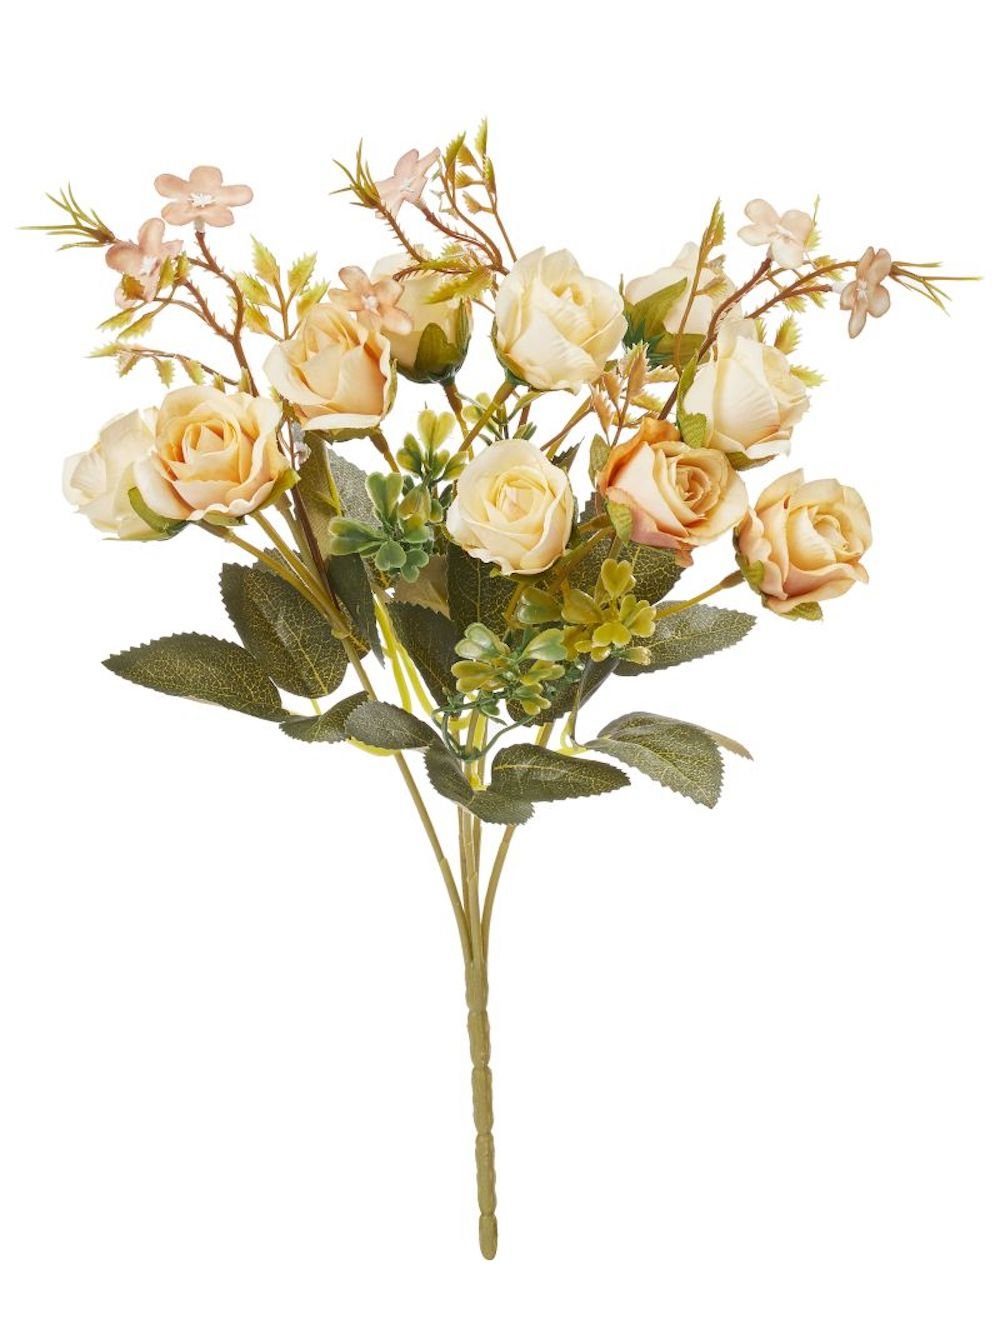 HobbyFun Dekofigur Rosenstrauß, ca. 30cm 10 Creme Blüten